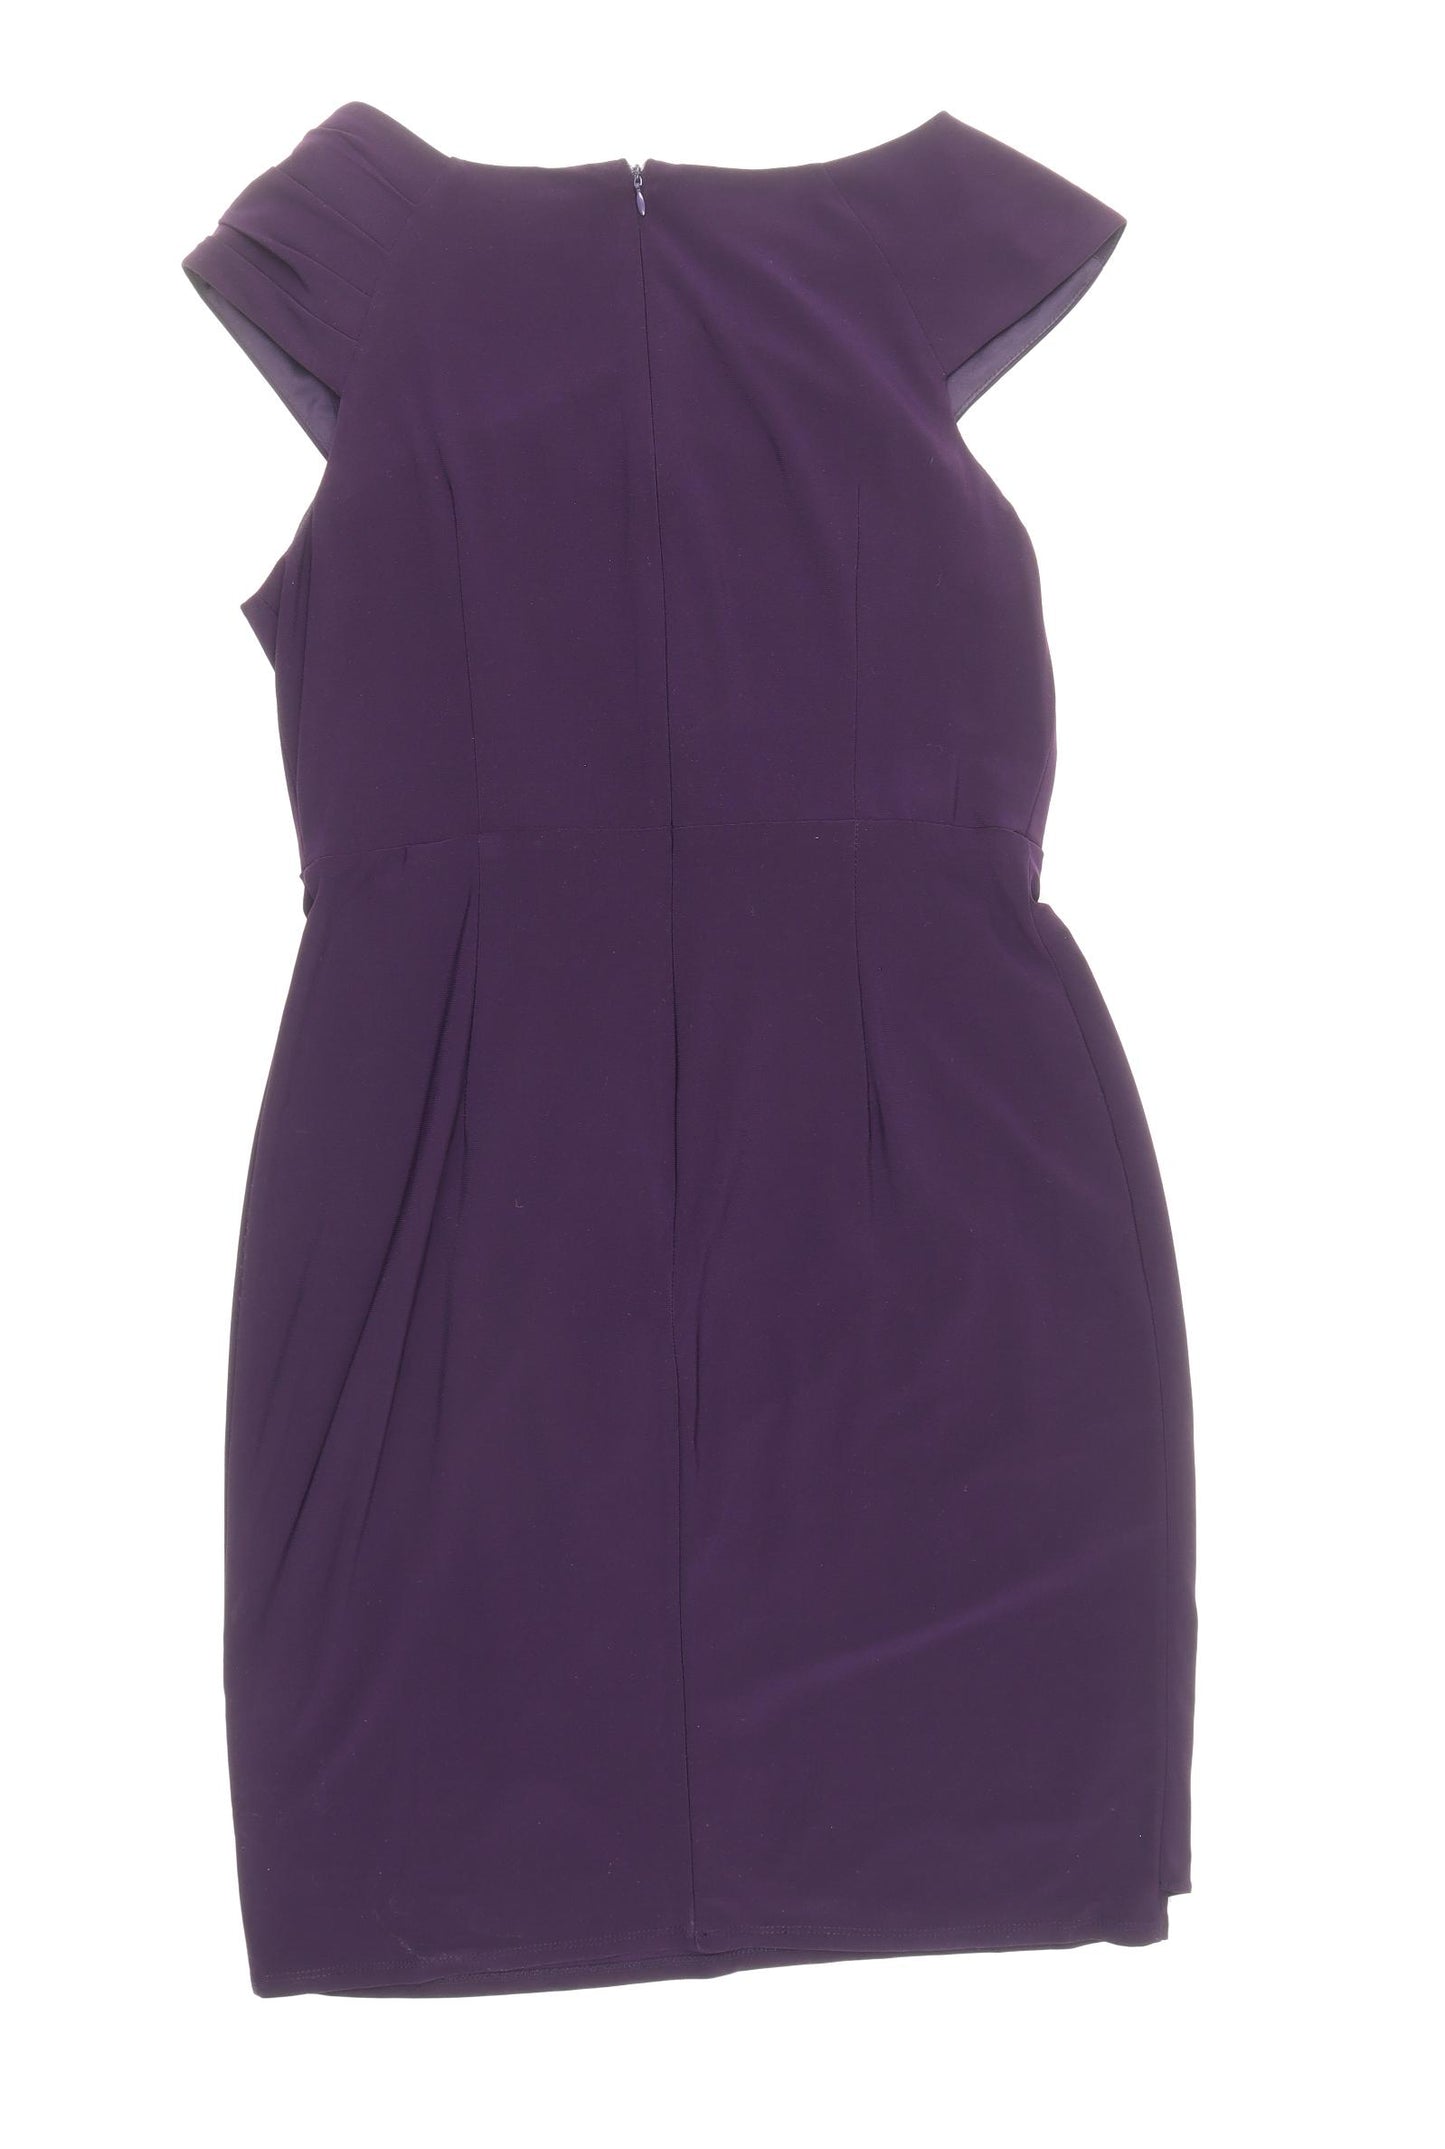 Jessica Howard Womens Purple Polyester Sheath Size 10 V-Neck Zip